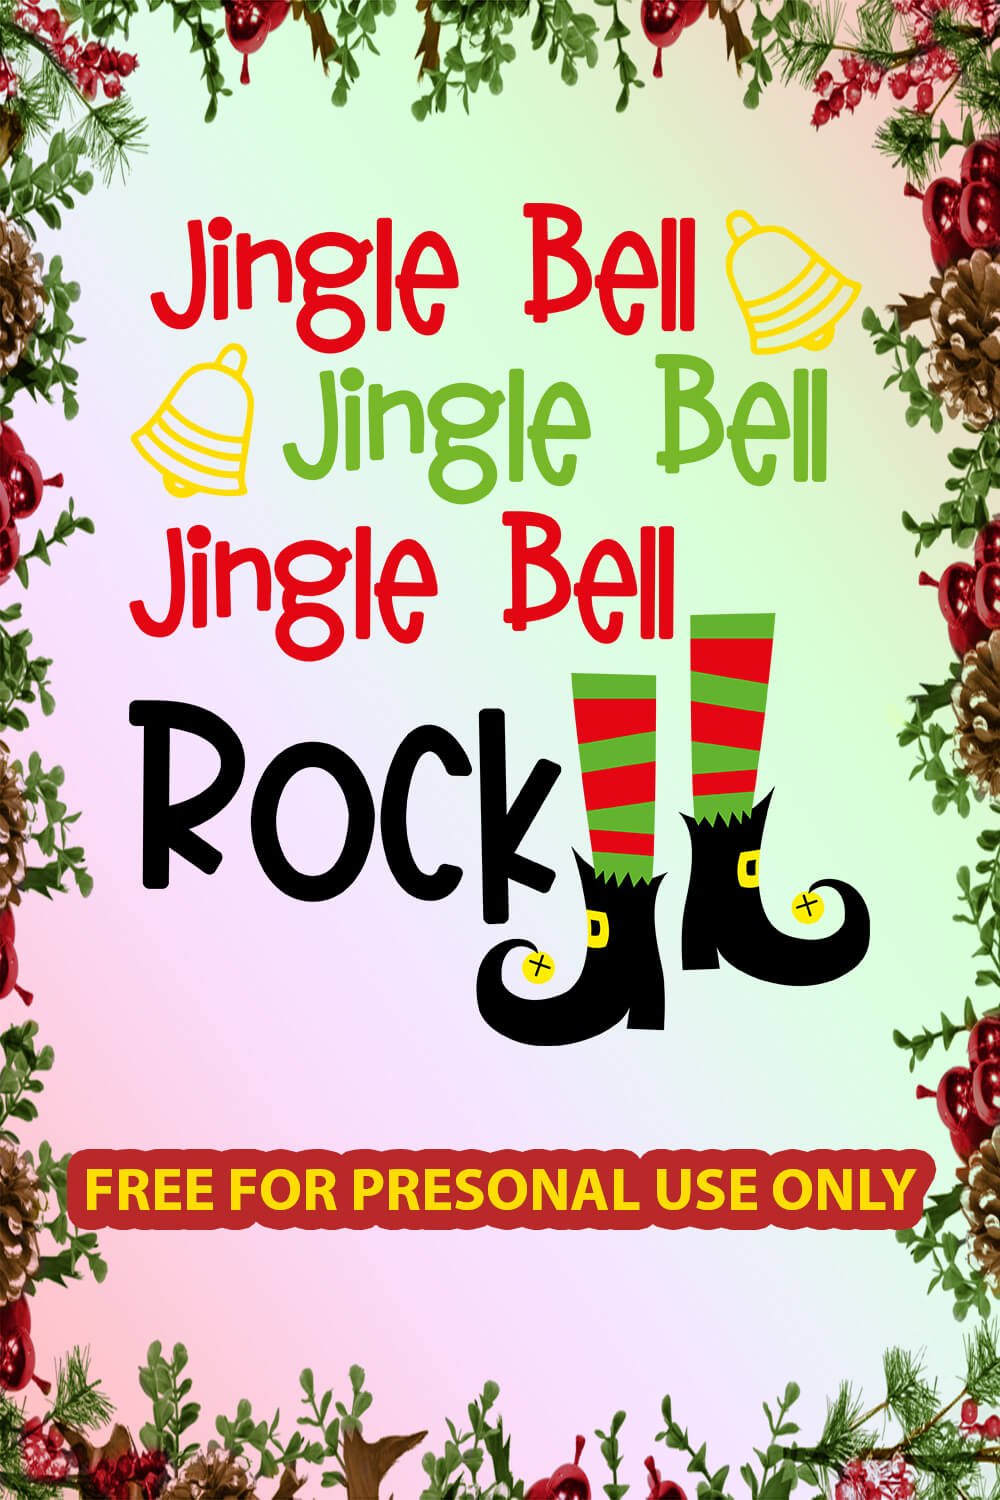 Christmas jingle bell rock free SVG files pinterest image.